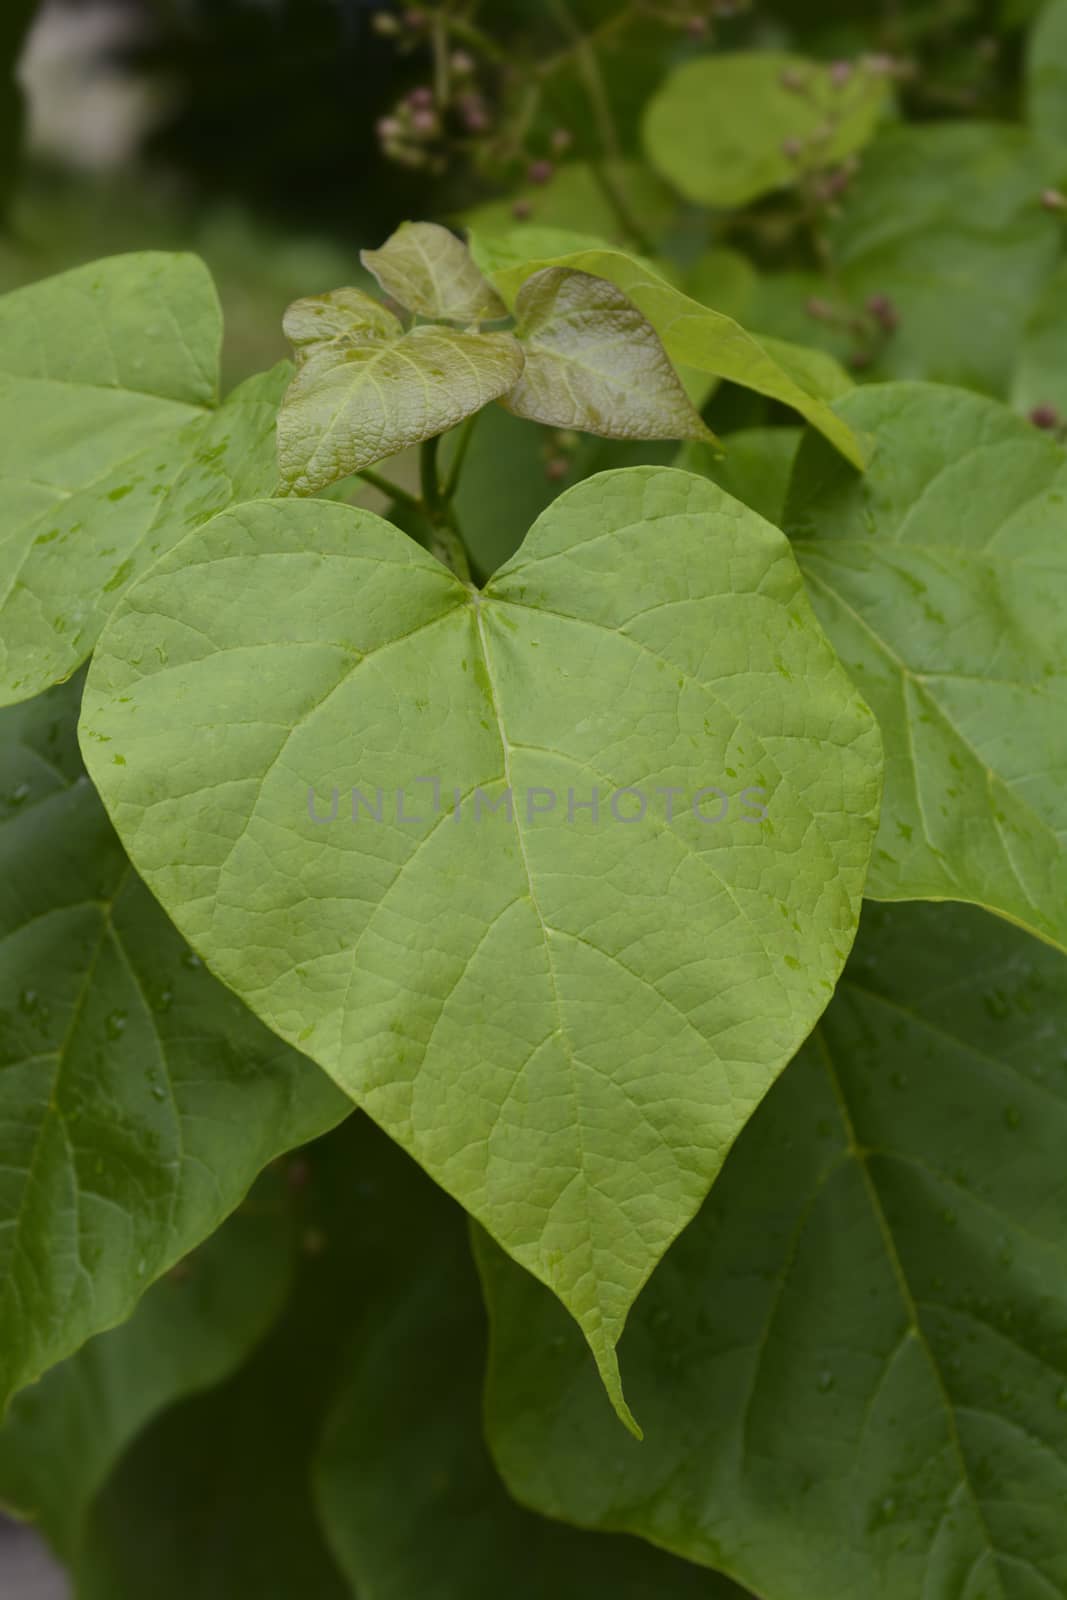 Common catalpa leaves - Latin name - Catalpa bignonioides